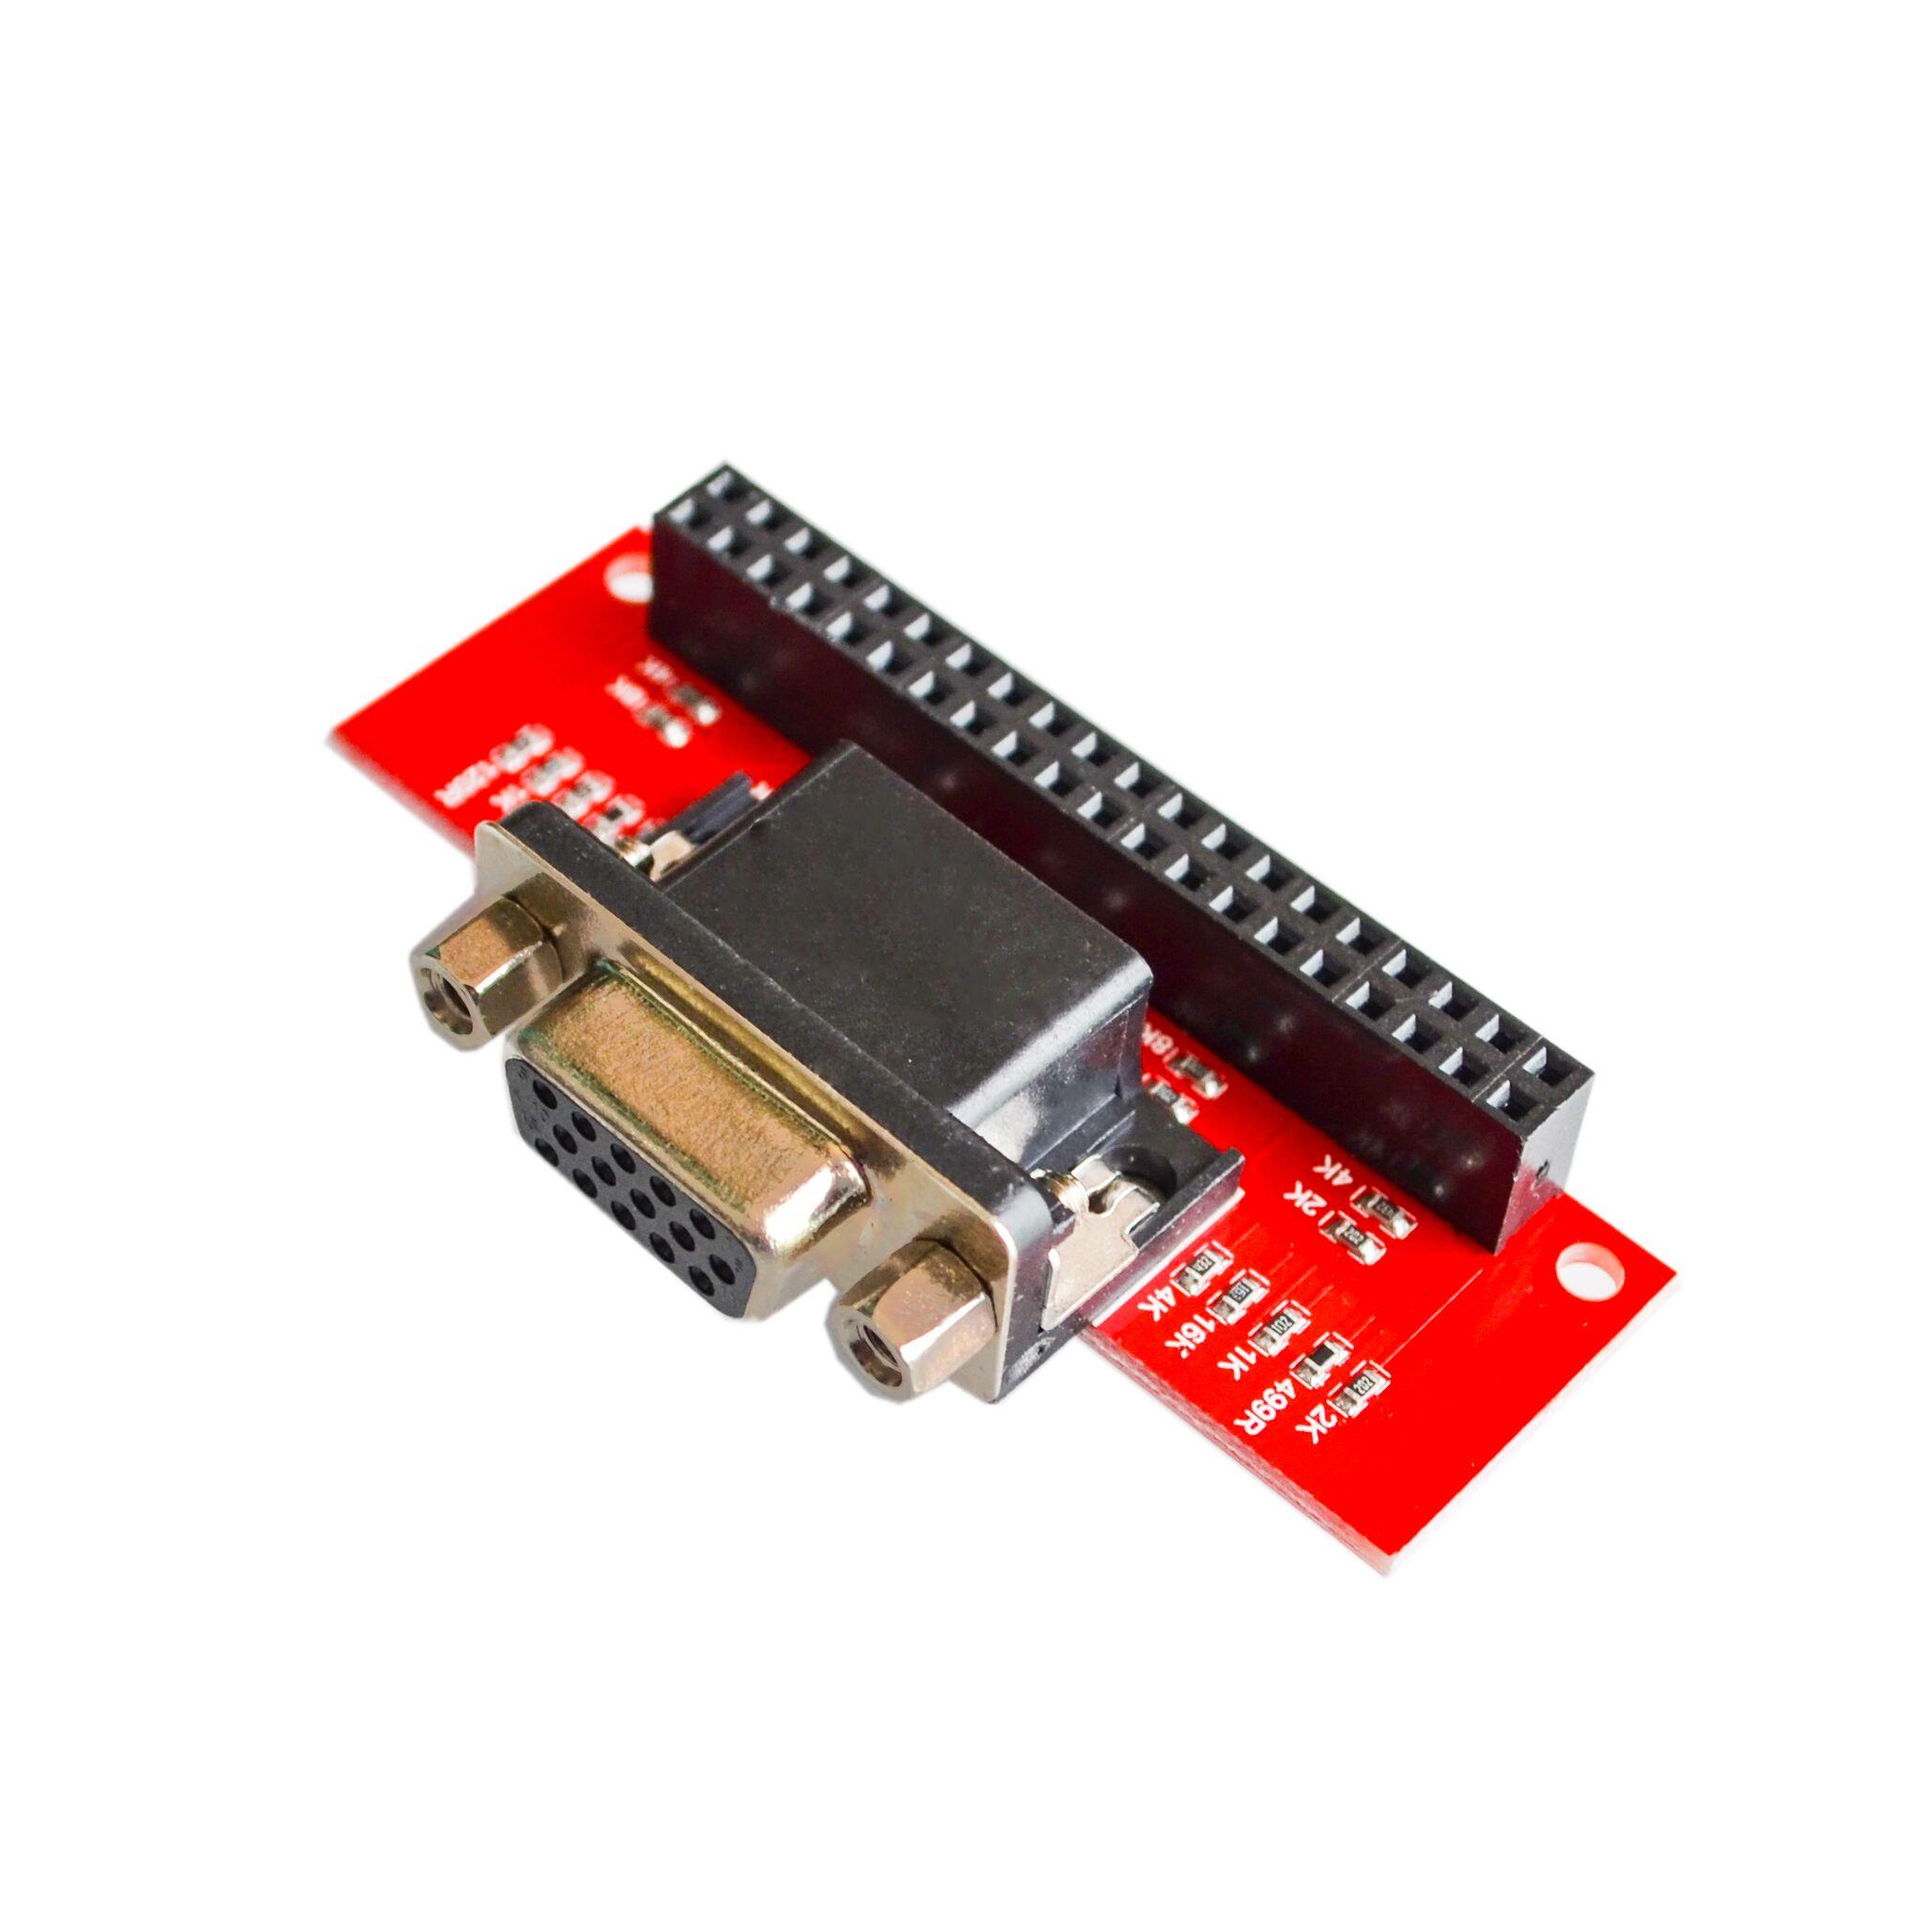 New Version VGA666 Adapter Board DPI dtoverlays Module For Raspberry Pi 3B / 2B / B+ / A+ free shipping